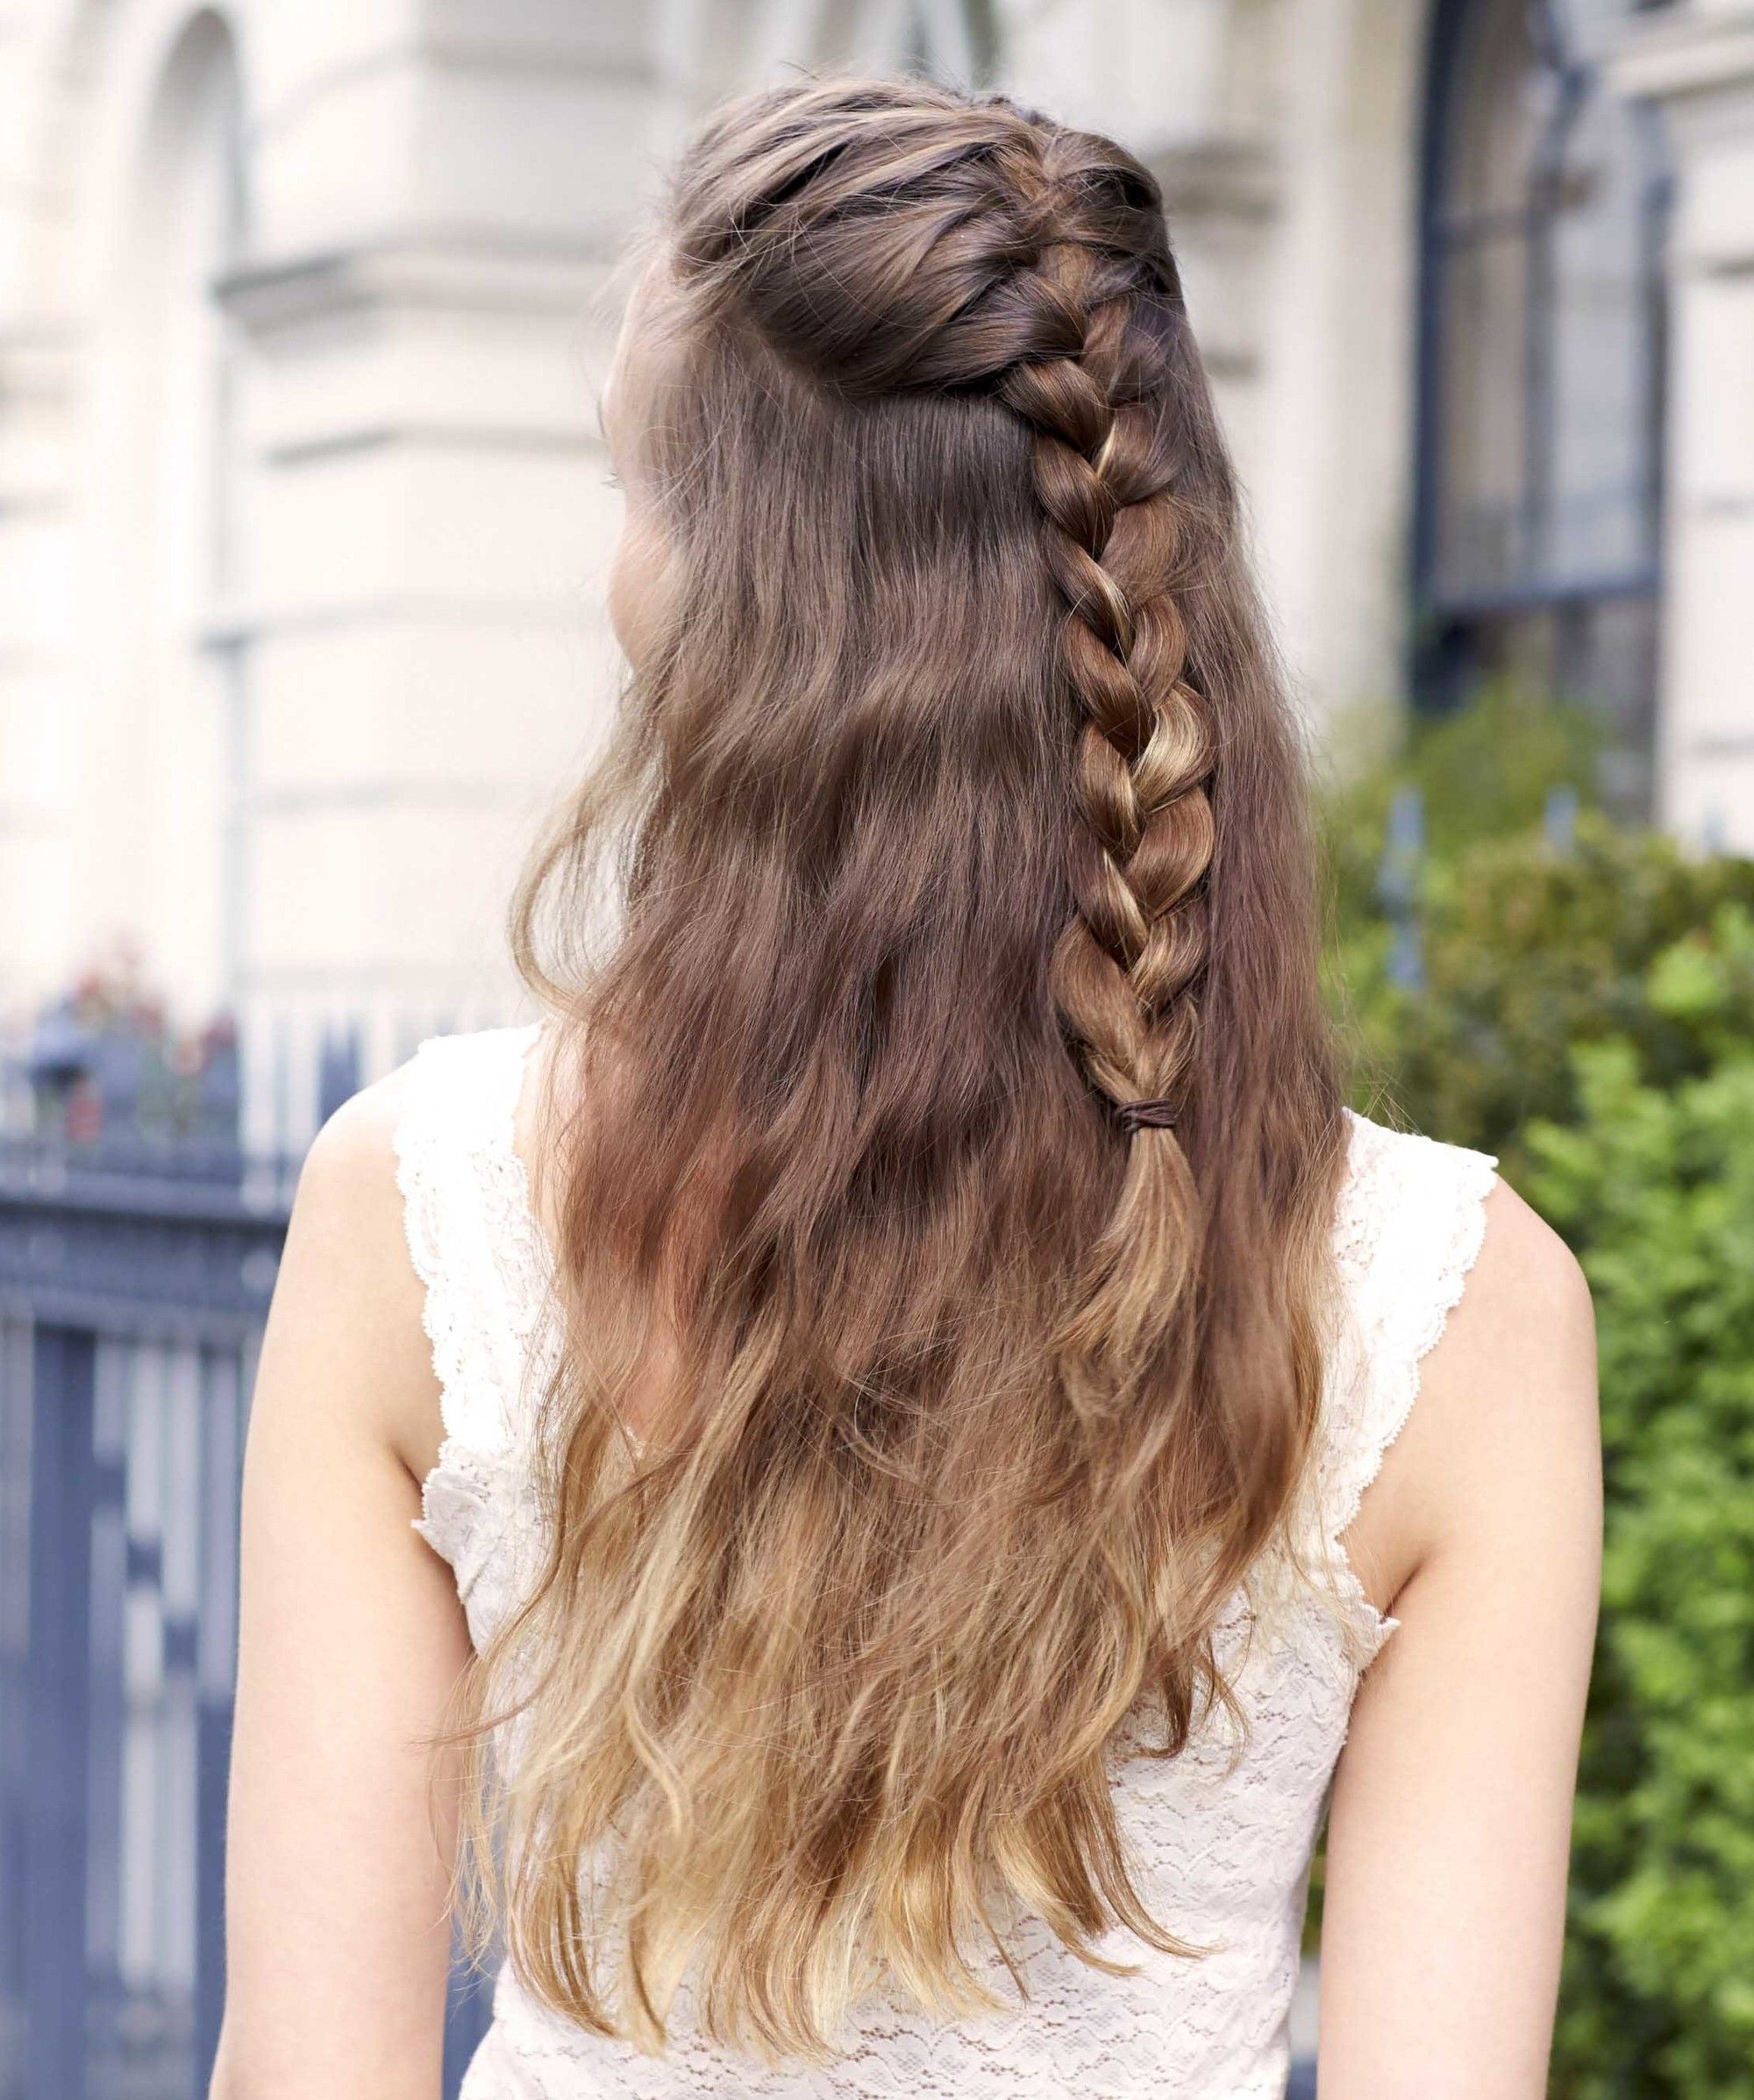 Cute side braids | Half braided hairstyles, Side braid hairstyles, Hairstyle